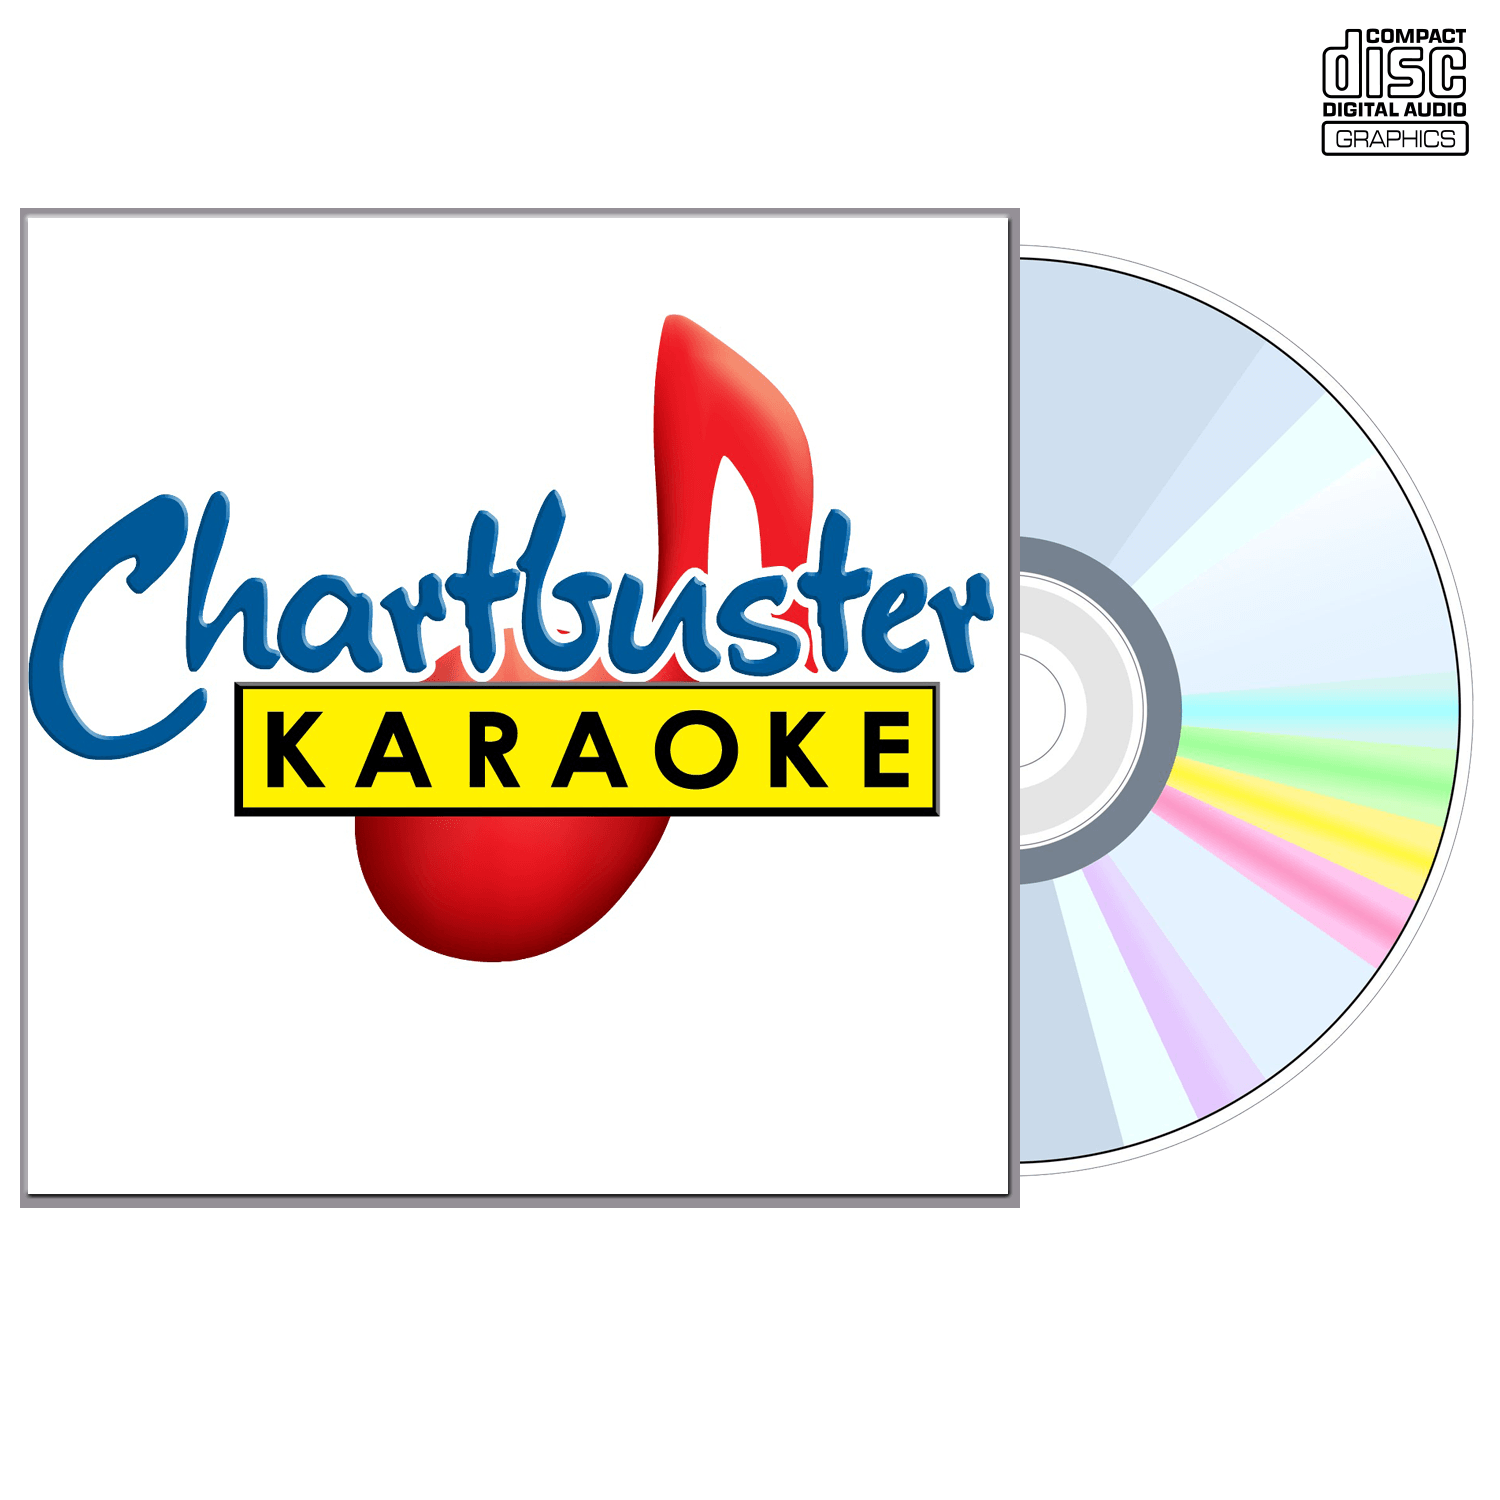 Garth Brooks Vol 4 - CD+G - Chartbuster Karaoke - Karaoke Home Entertainment